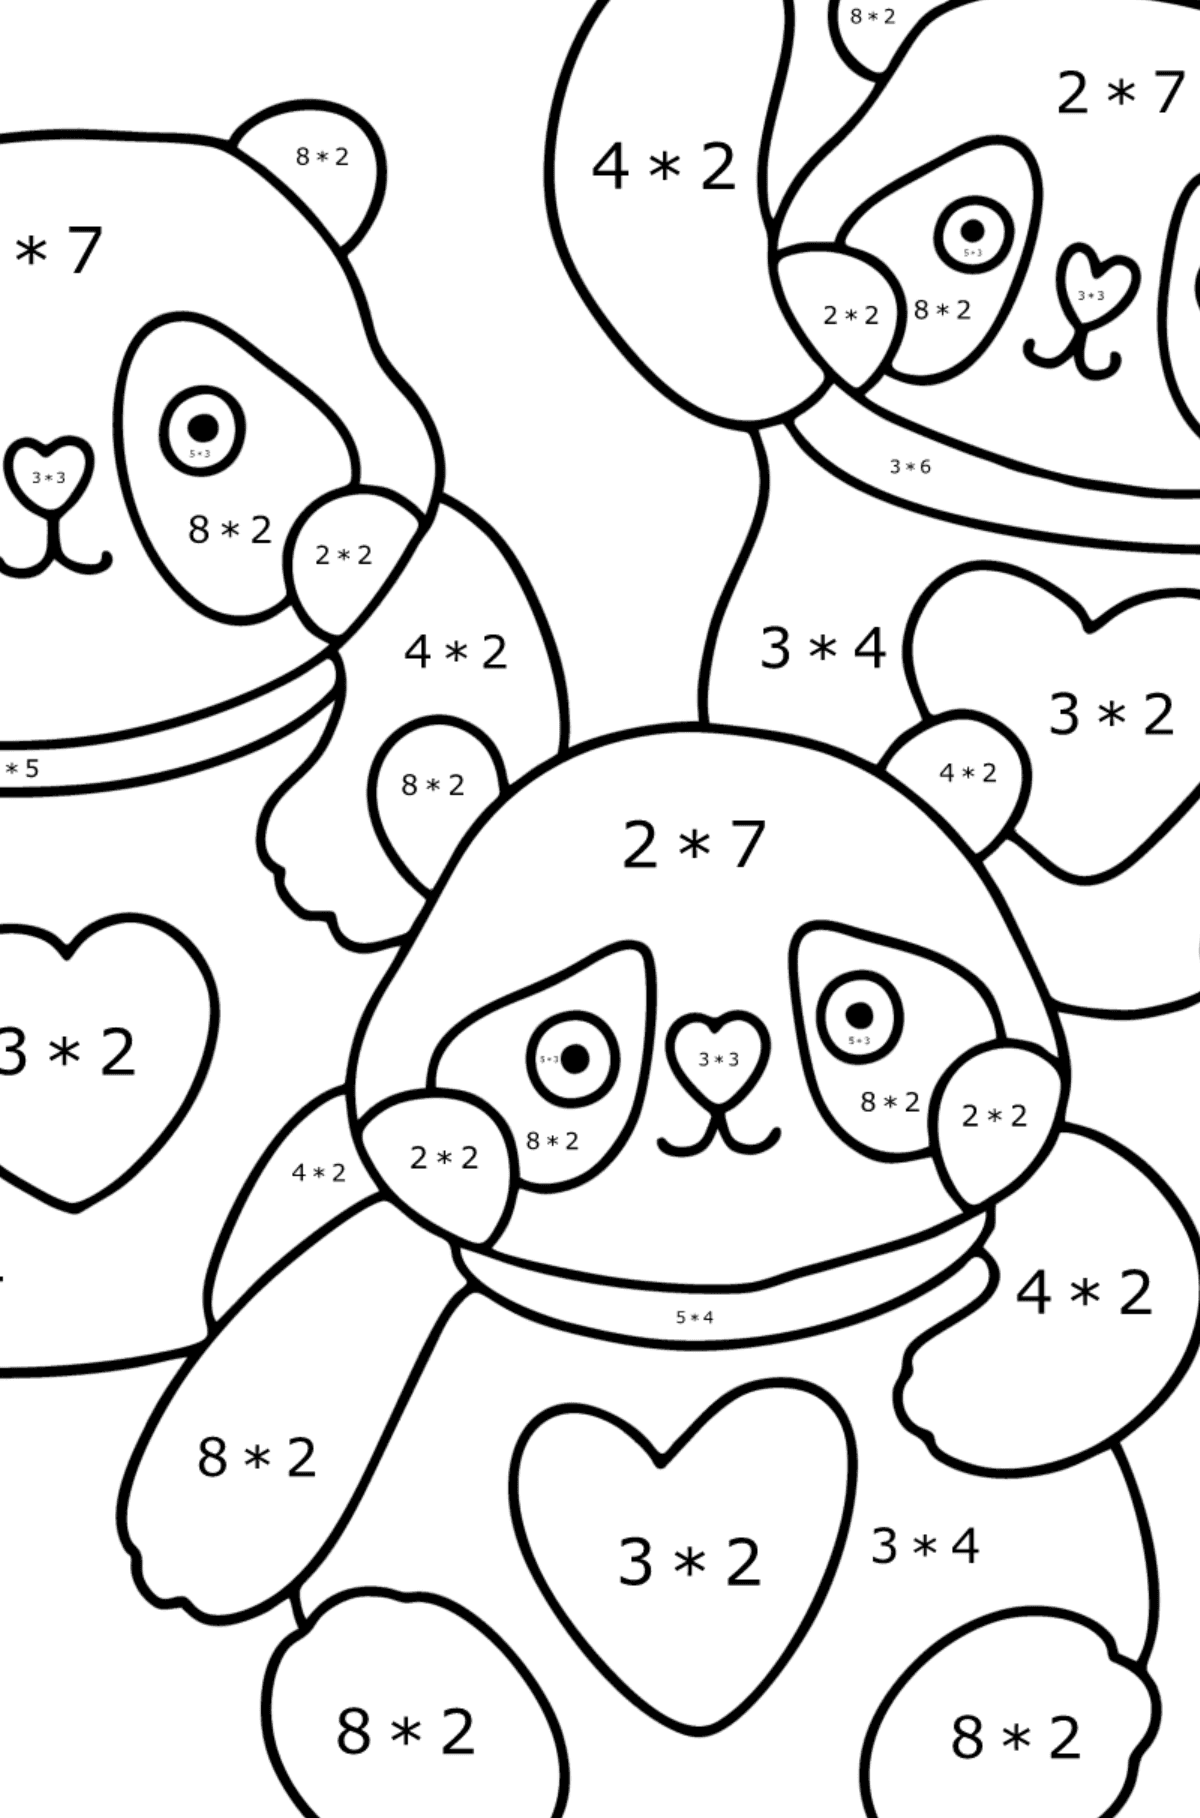 Ausmalbild Kawaii Pandas - Mathe Ausmalbilder - Multiplikation für Kinder